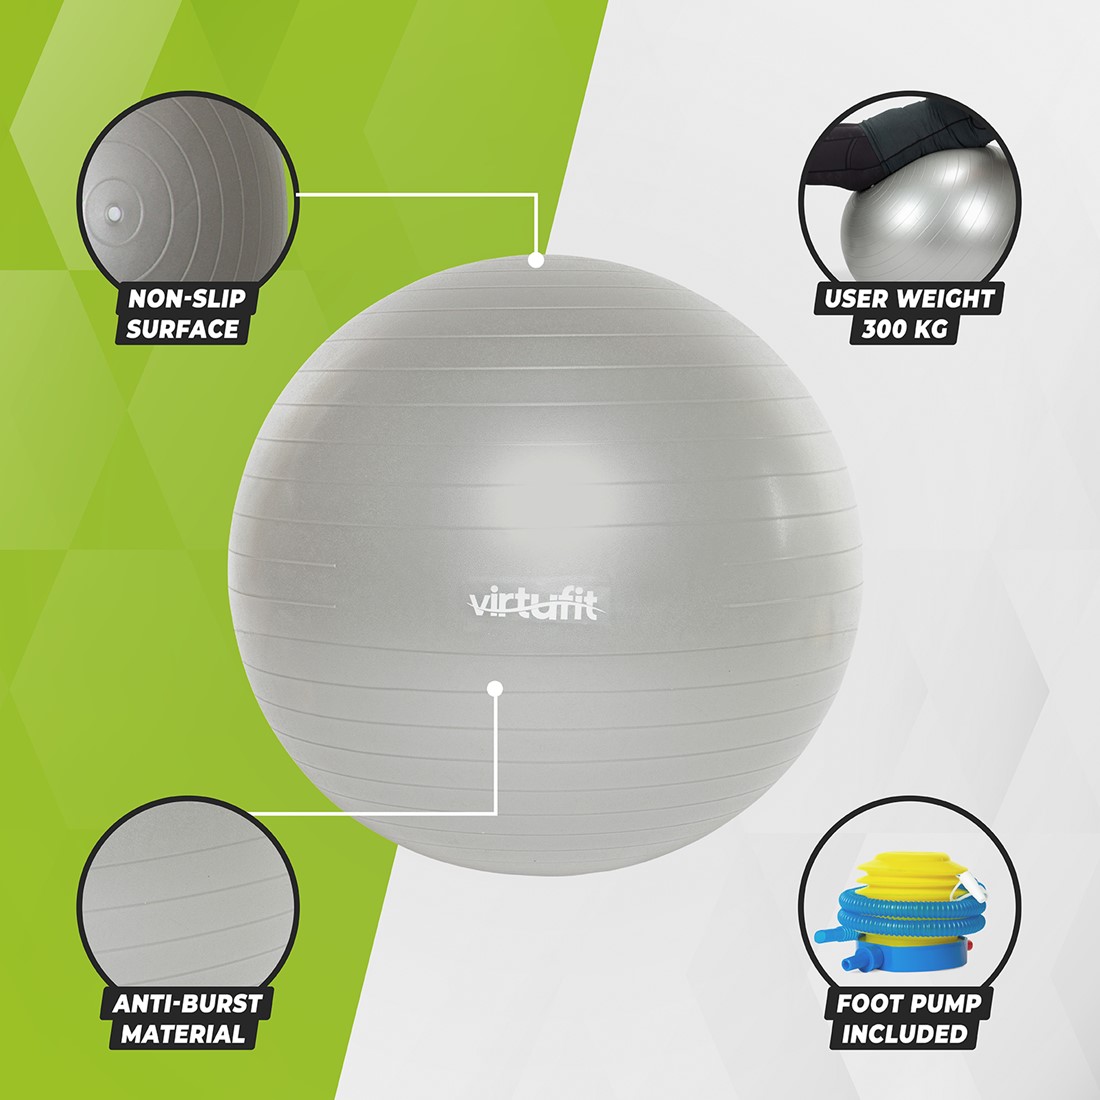 VirtuFit Anti-Burst Exercise Ball Pro - Gray - 65 cm